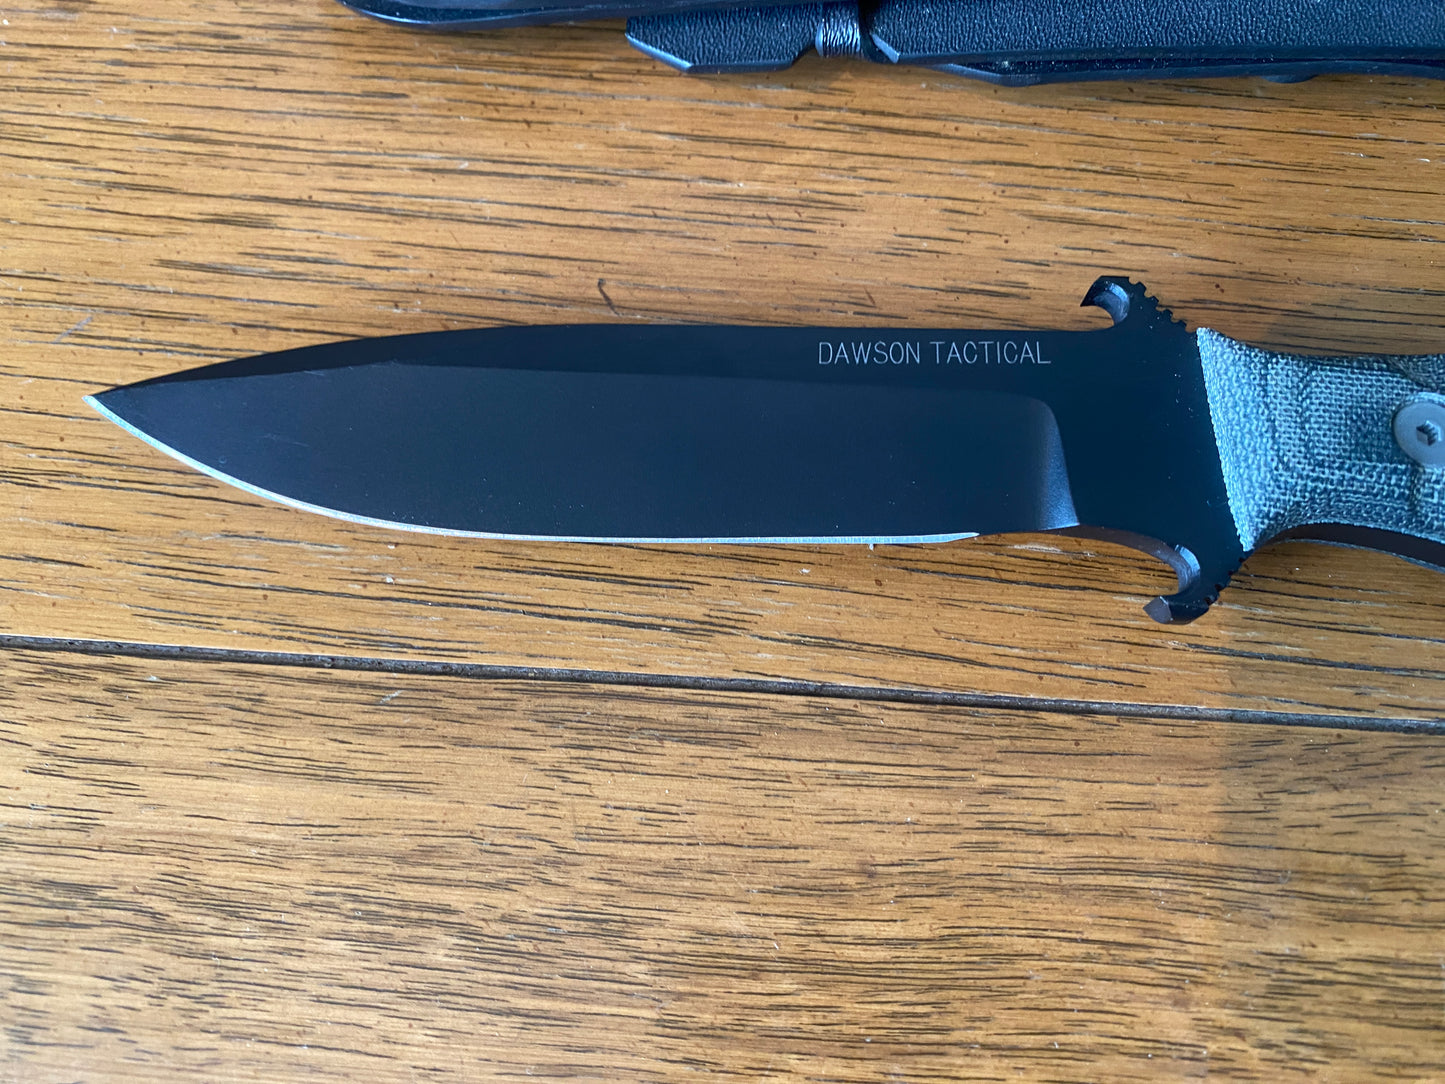 Dawson Tactical Raider 5 Sheath Knife